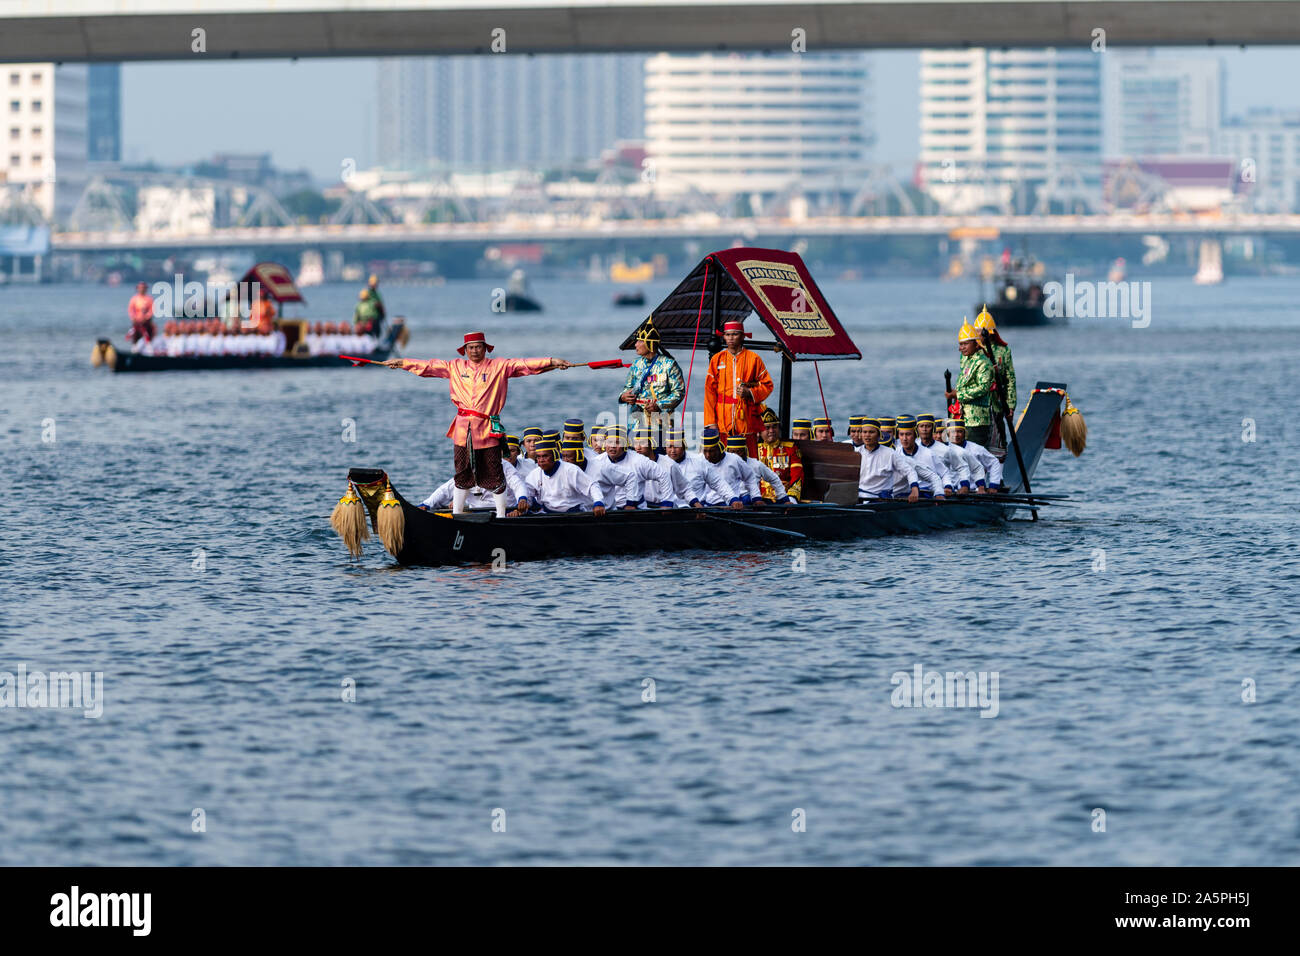 Bangkok, Thailand - October 21, 2019: Thai  royal barges participate in a procession on Bangkok's Chao Phraya River. Stock Photo